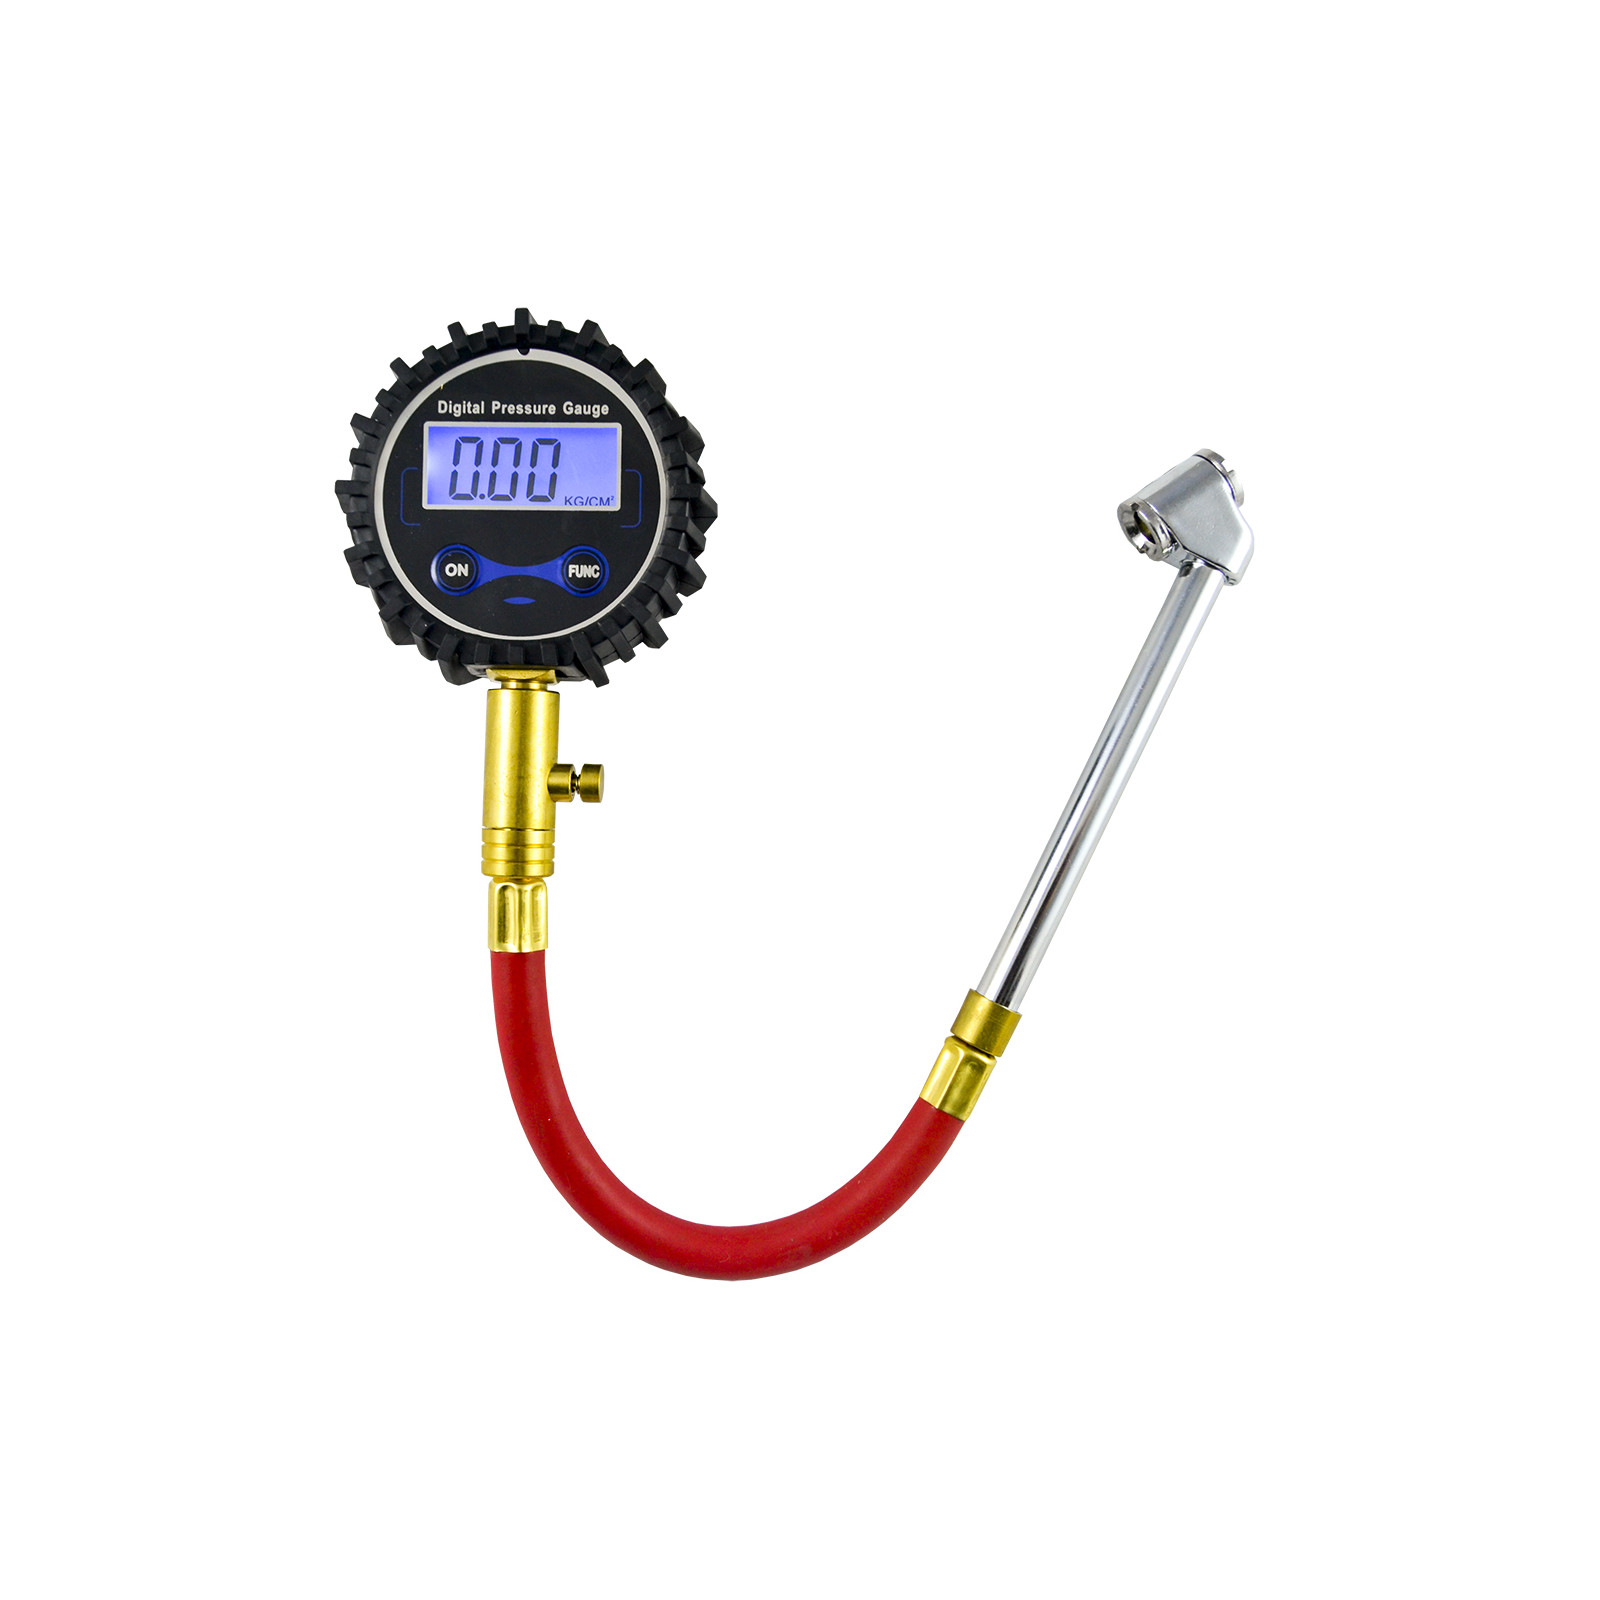 Testeur digital de pression de pneumatiques avec tube (0-15bar)﻿